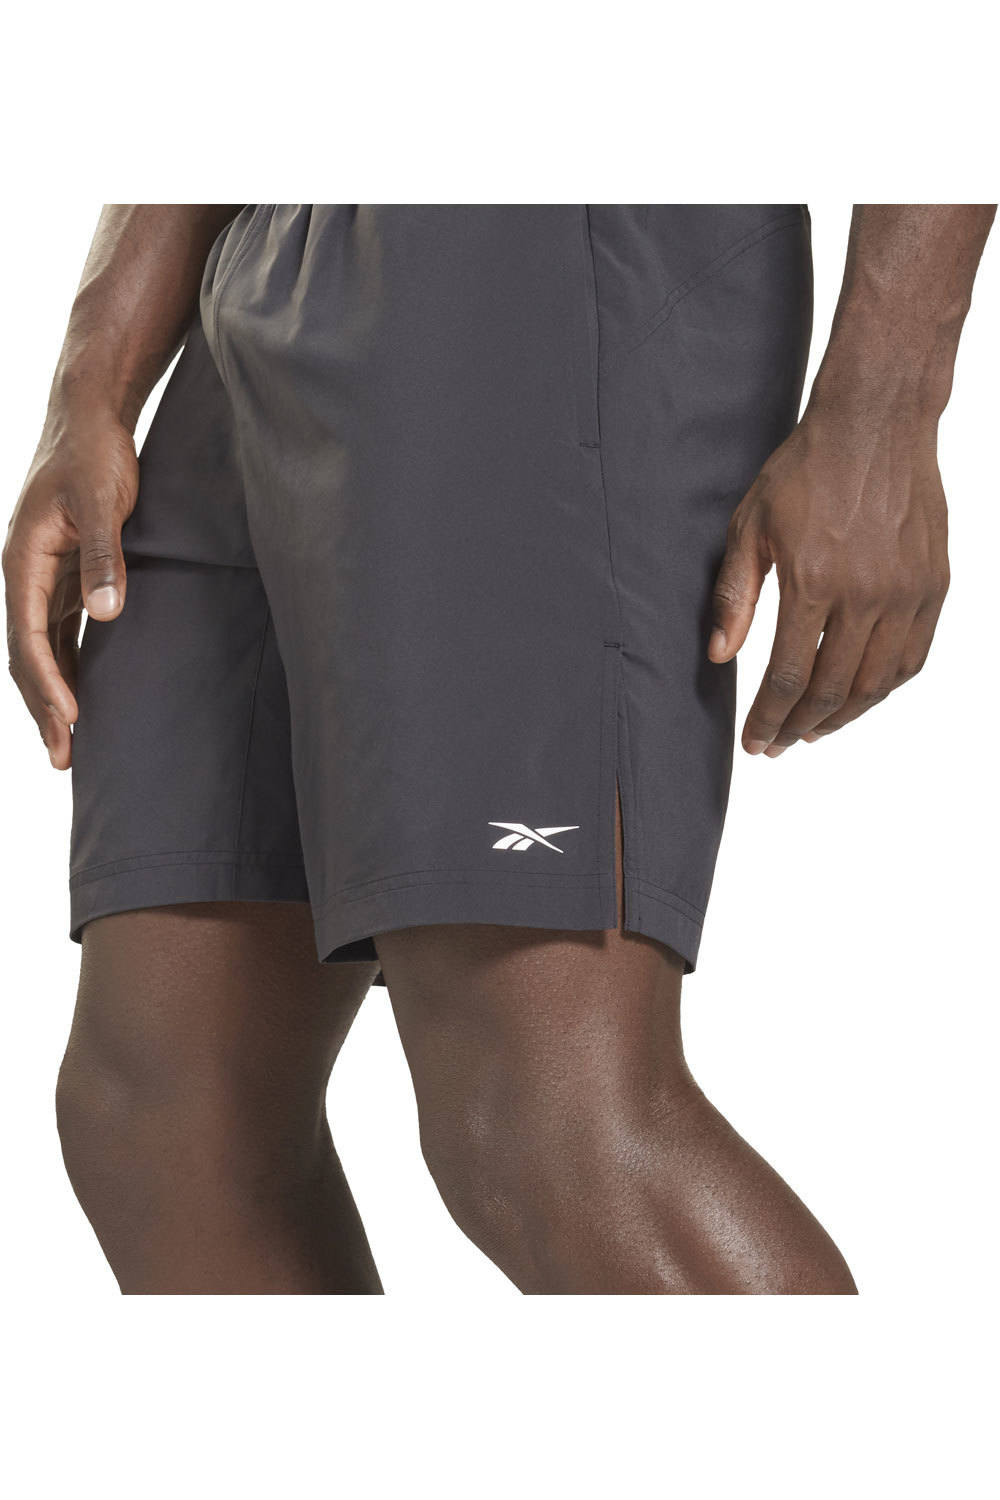 Reebok pantalón corto fitness hombre AUSTIN SHORT - SOLID vista detalle